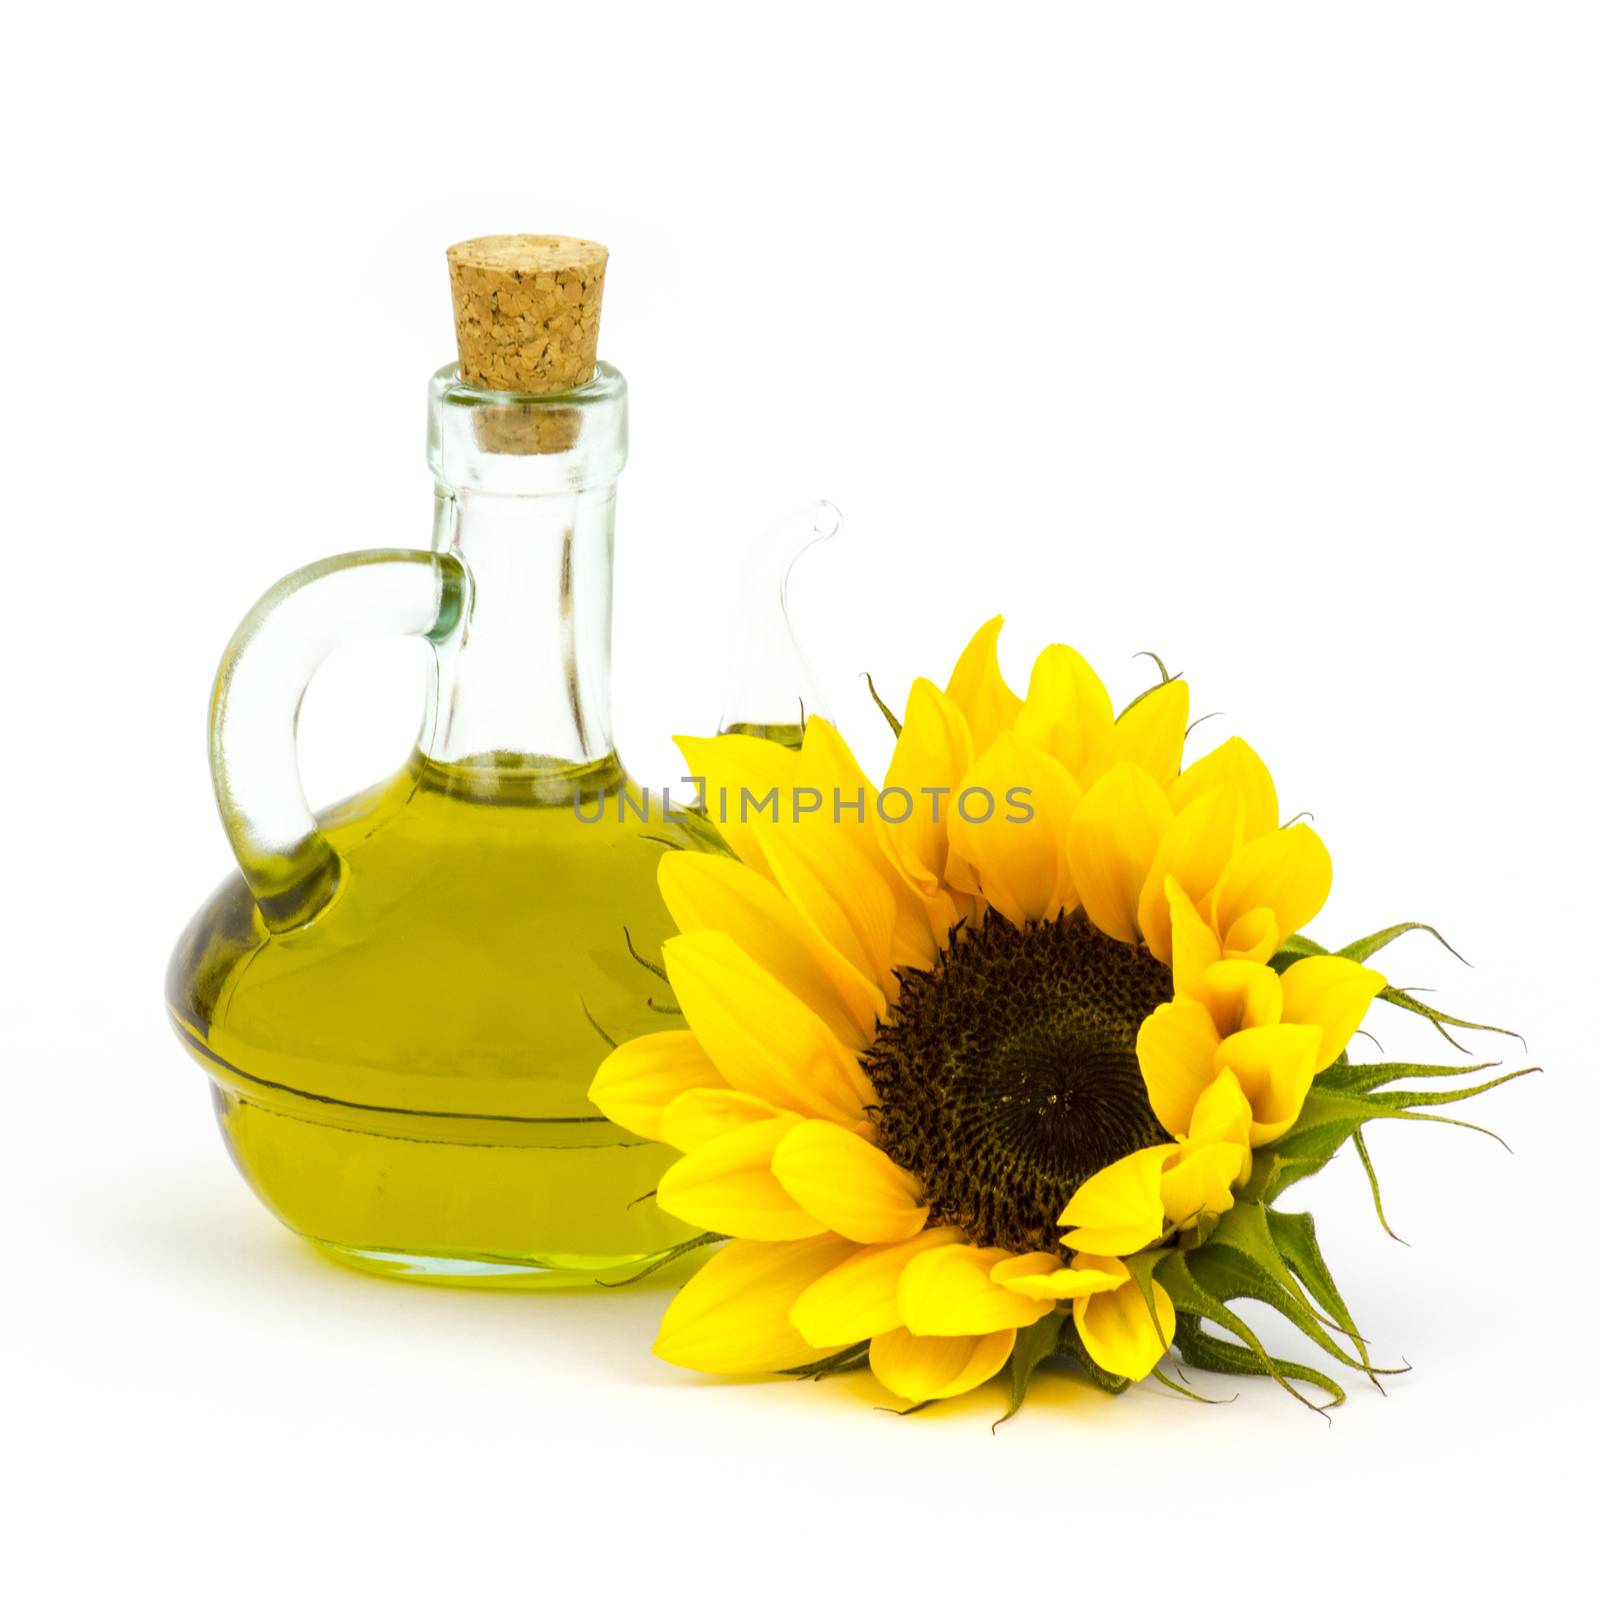 sunflower oil and sunflowers by miradrozdowski